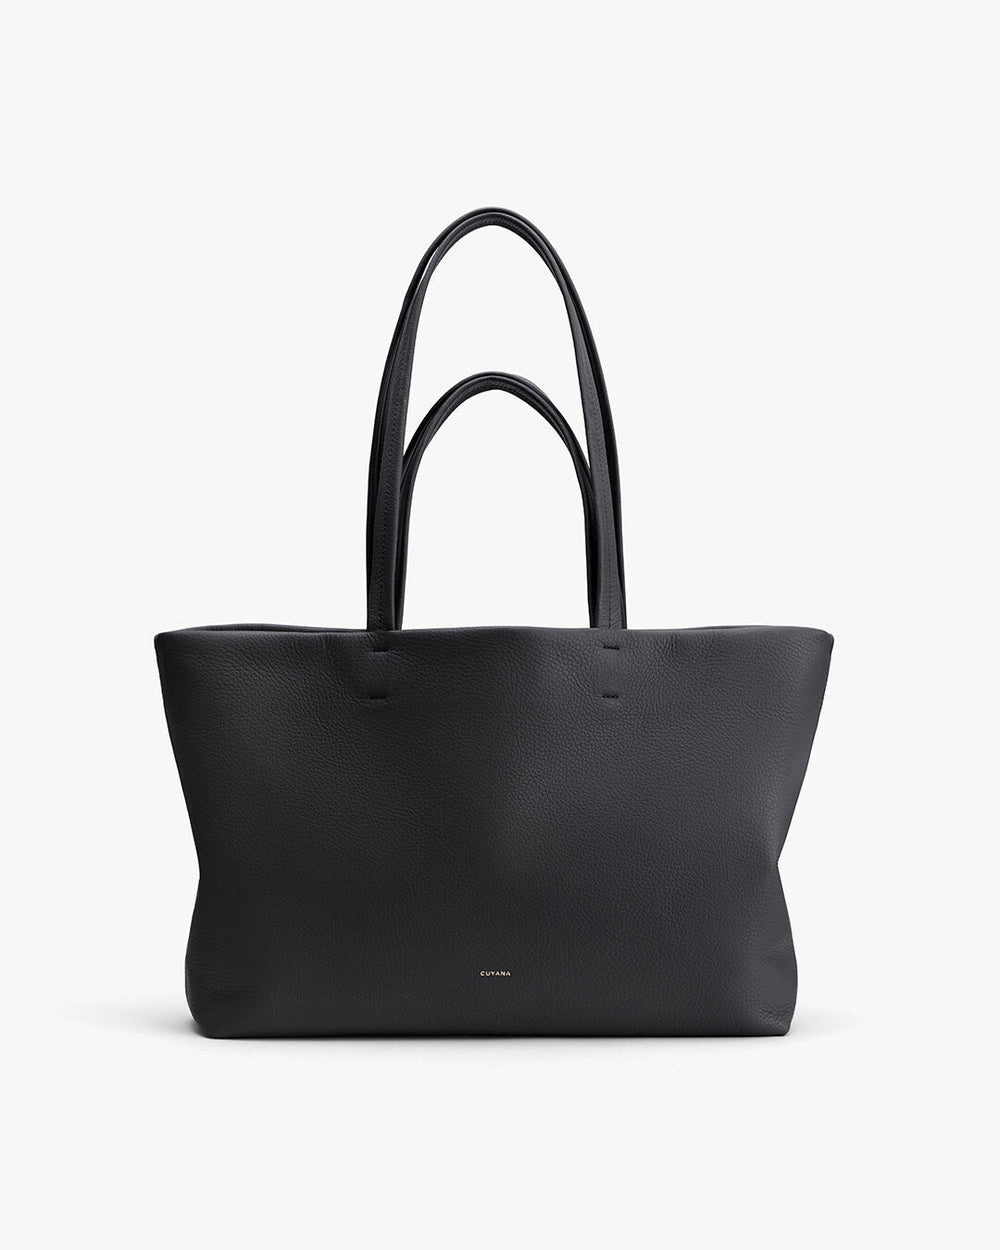 Cuyana double loop review : r/handbags